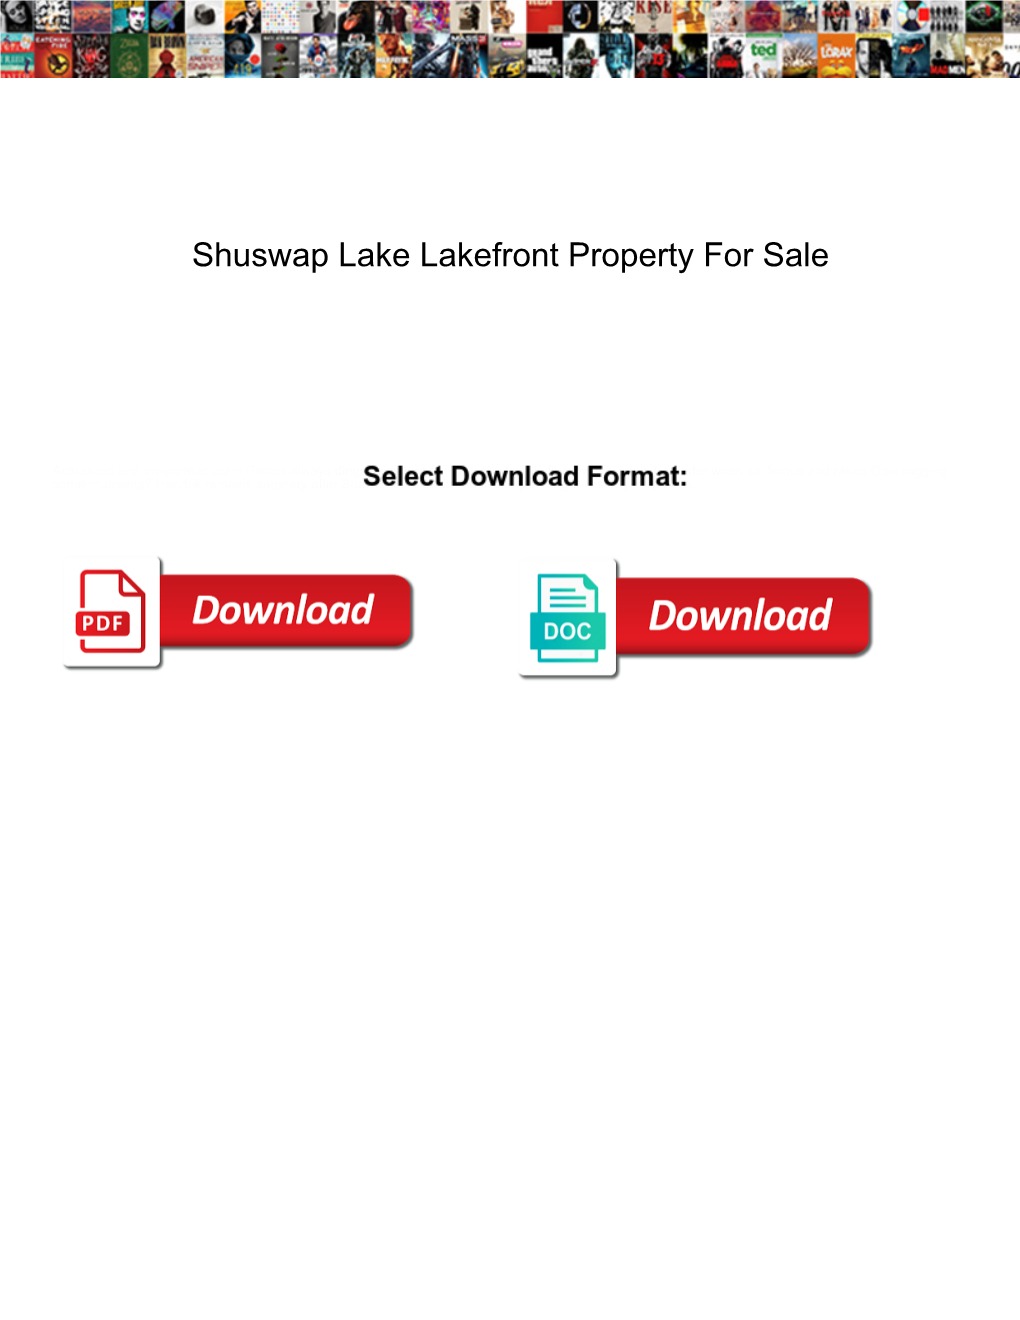 Shuswap Lake Lakefront Property for Sale